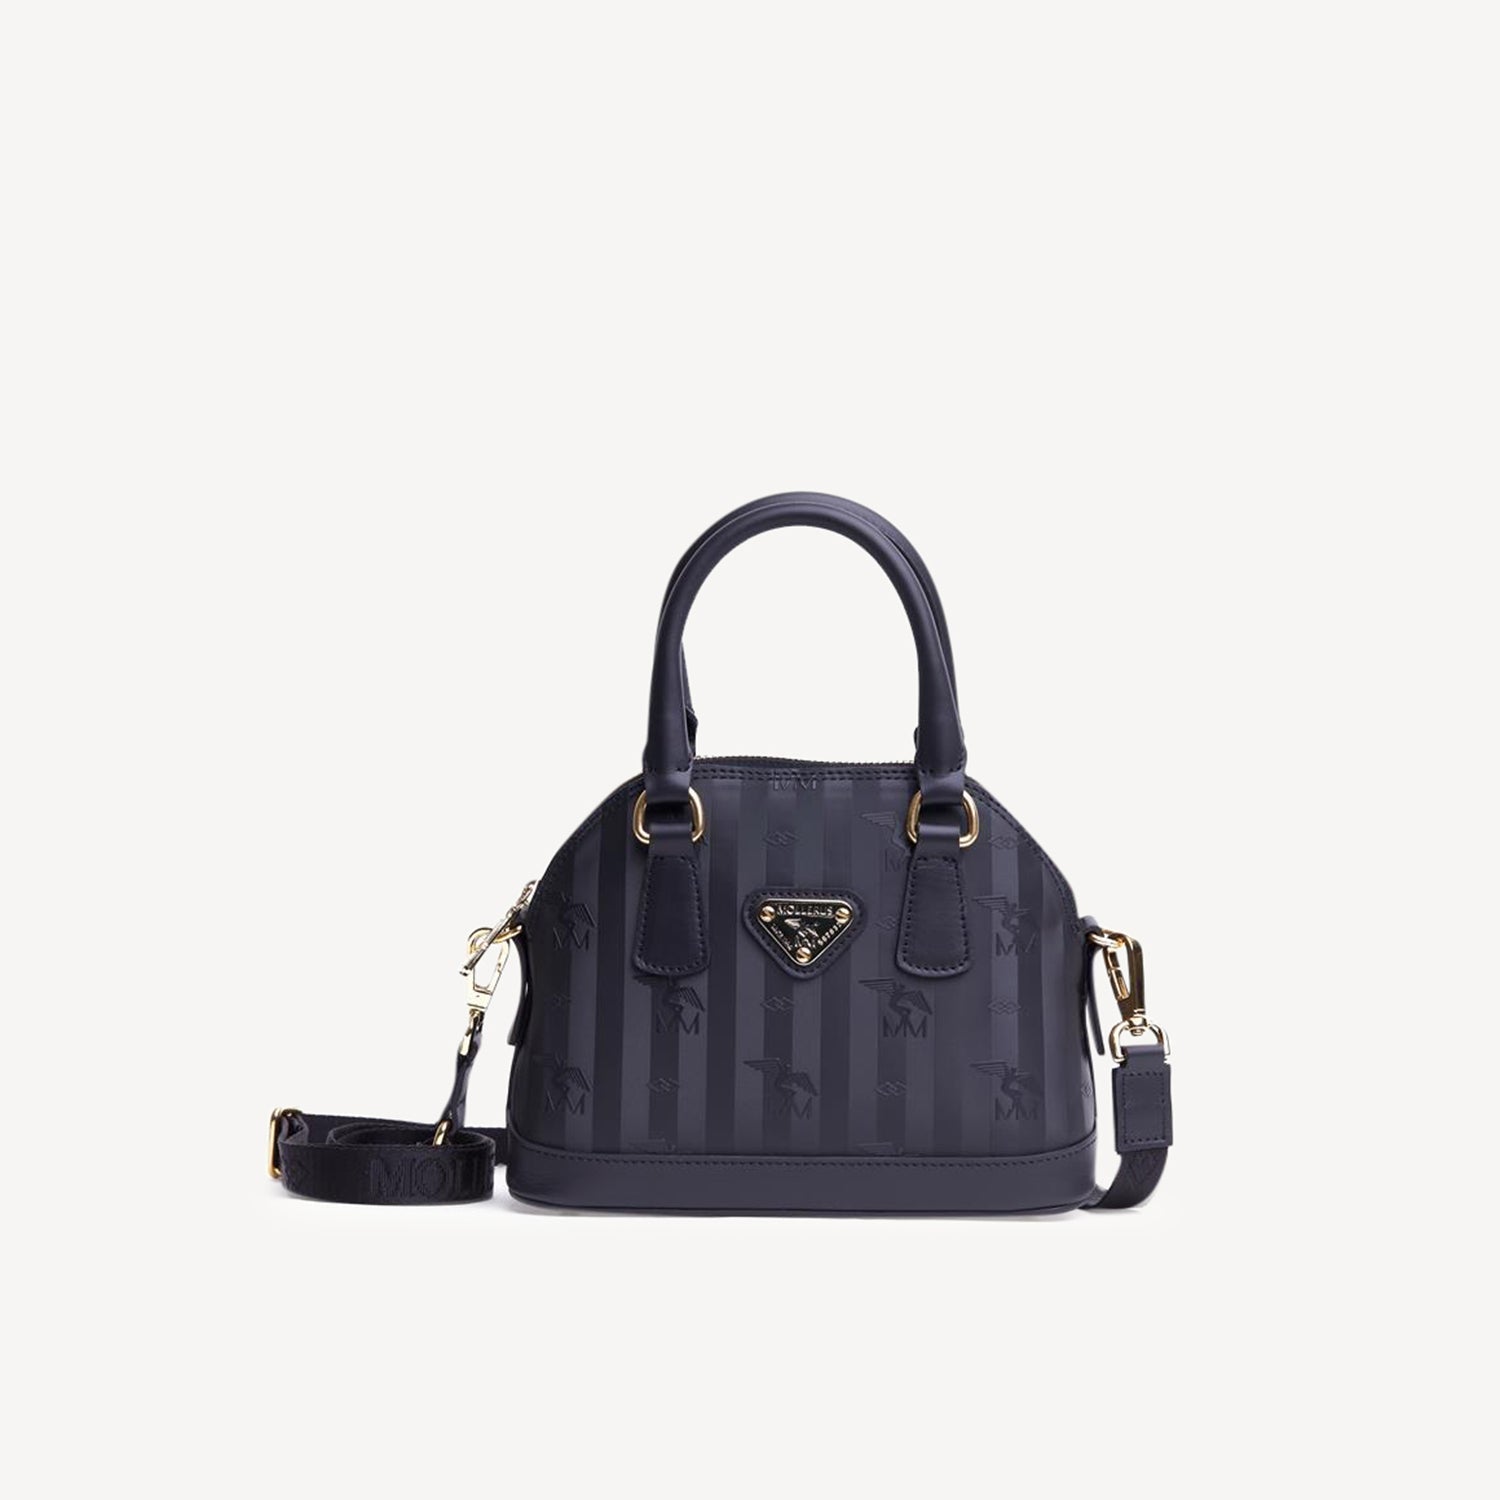 OETWIL | Handbag black/gold